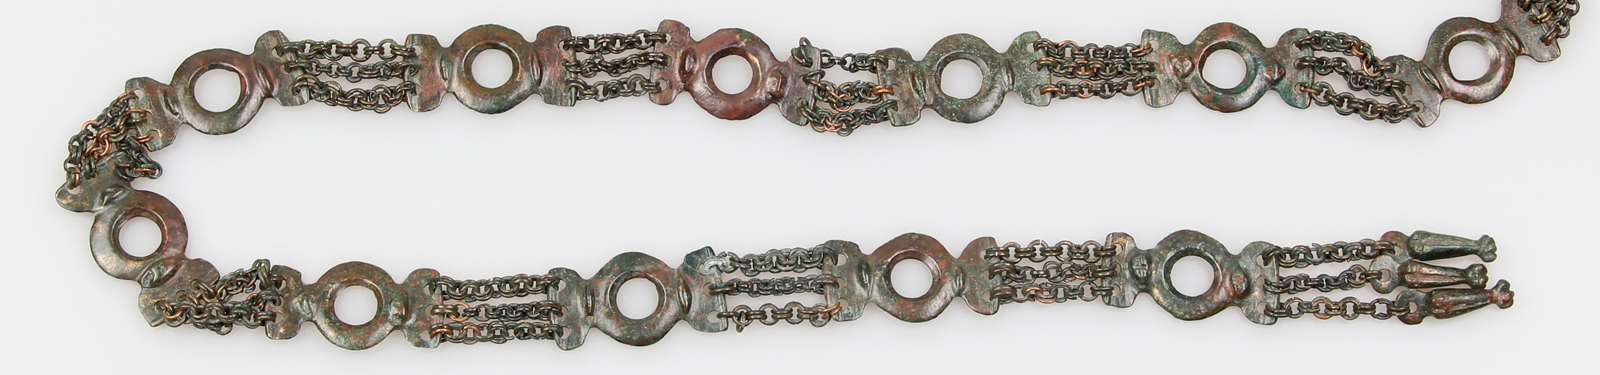 Laténe belt chain from Oberrohrbach, c. 200 BC, © Landessammlungen NÖ